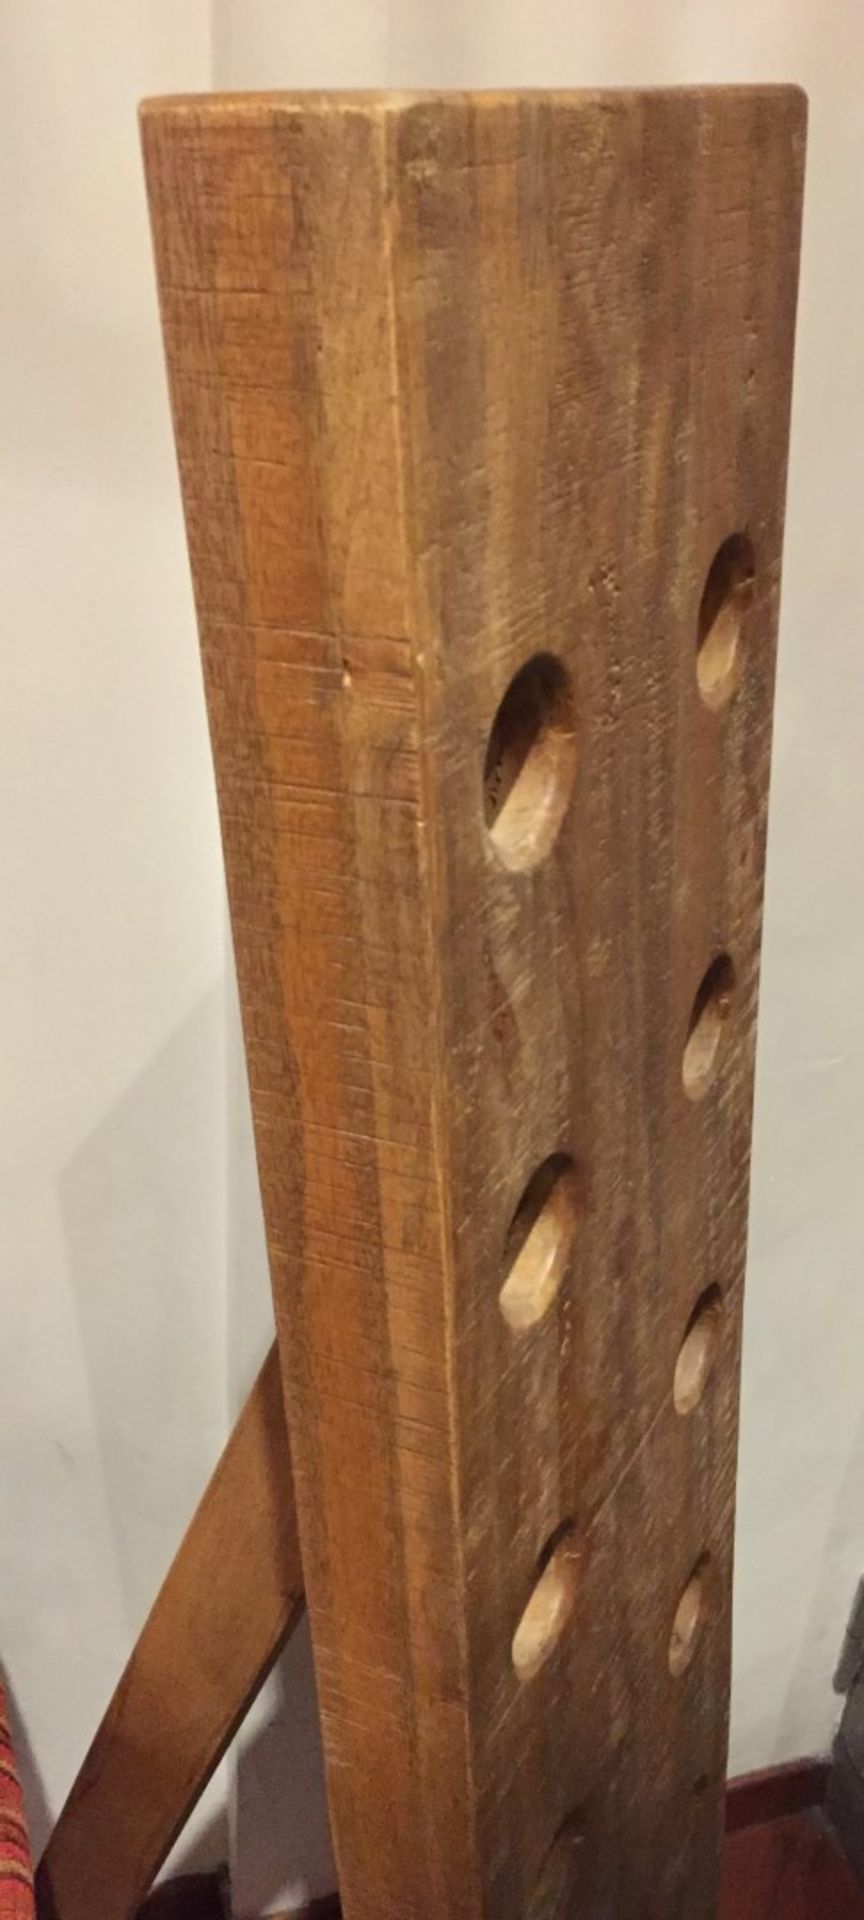 2 x Sleeper Freestanding Wine Racks - Solid Wood Rustic Design - 16 Bottle Capacity Each - CL188 - - Image 7 of 8